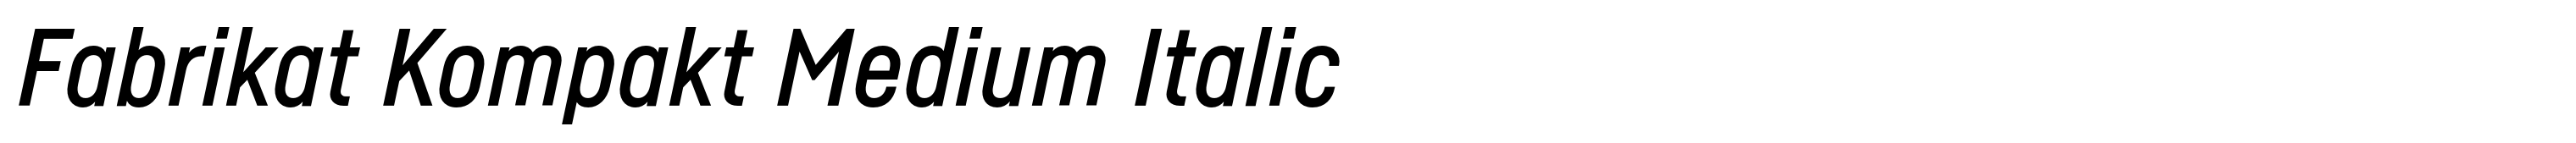 Fabrikat Kompakt Medium Italic